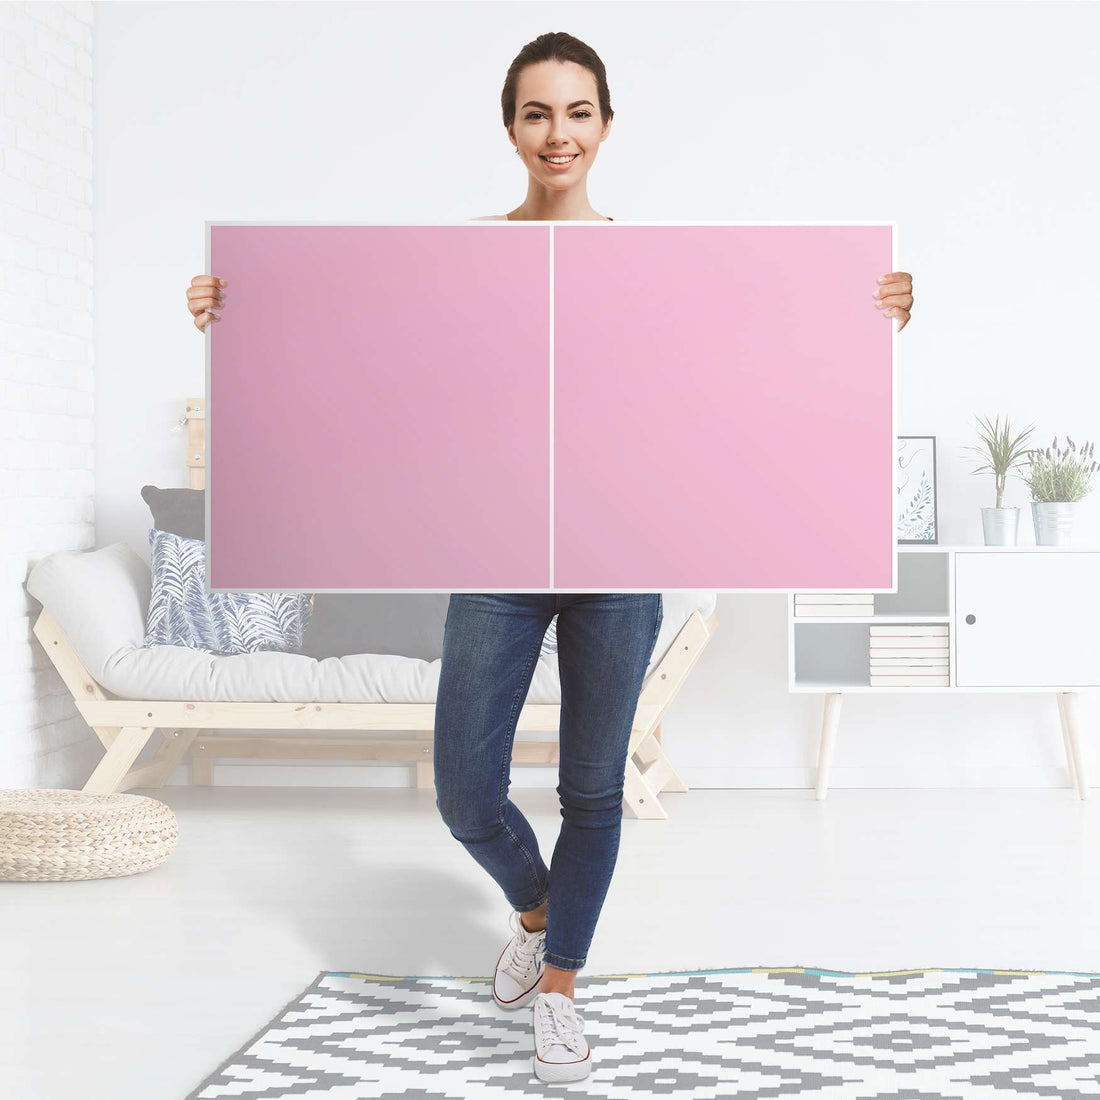 Folie für Möbel Pink Light - IKEA Besta Regal Quer 2 Türen - Folie